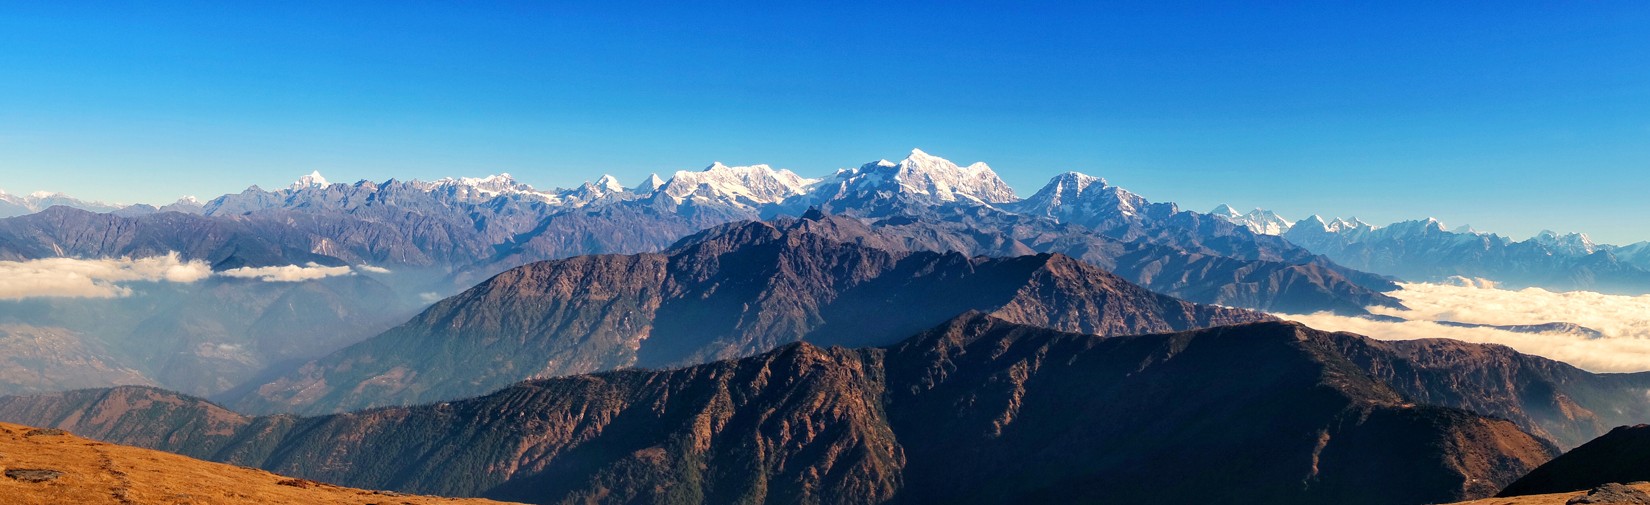 Pikey Peak Trek: One of Nepal's Best Short Treks in  Everest Region 